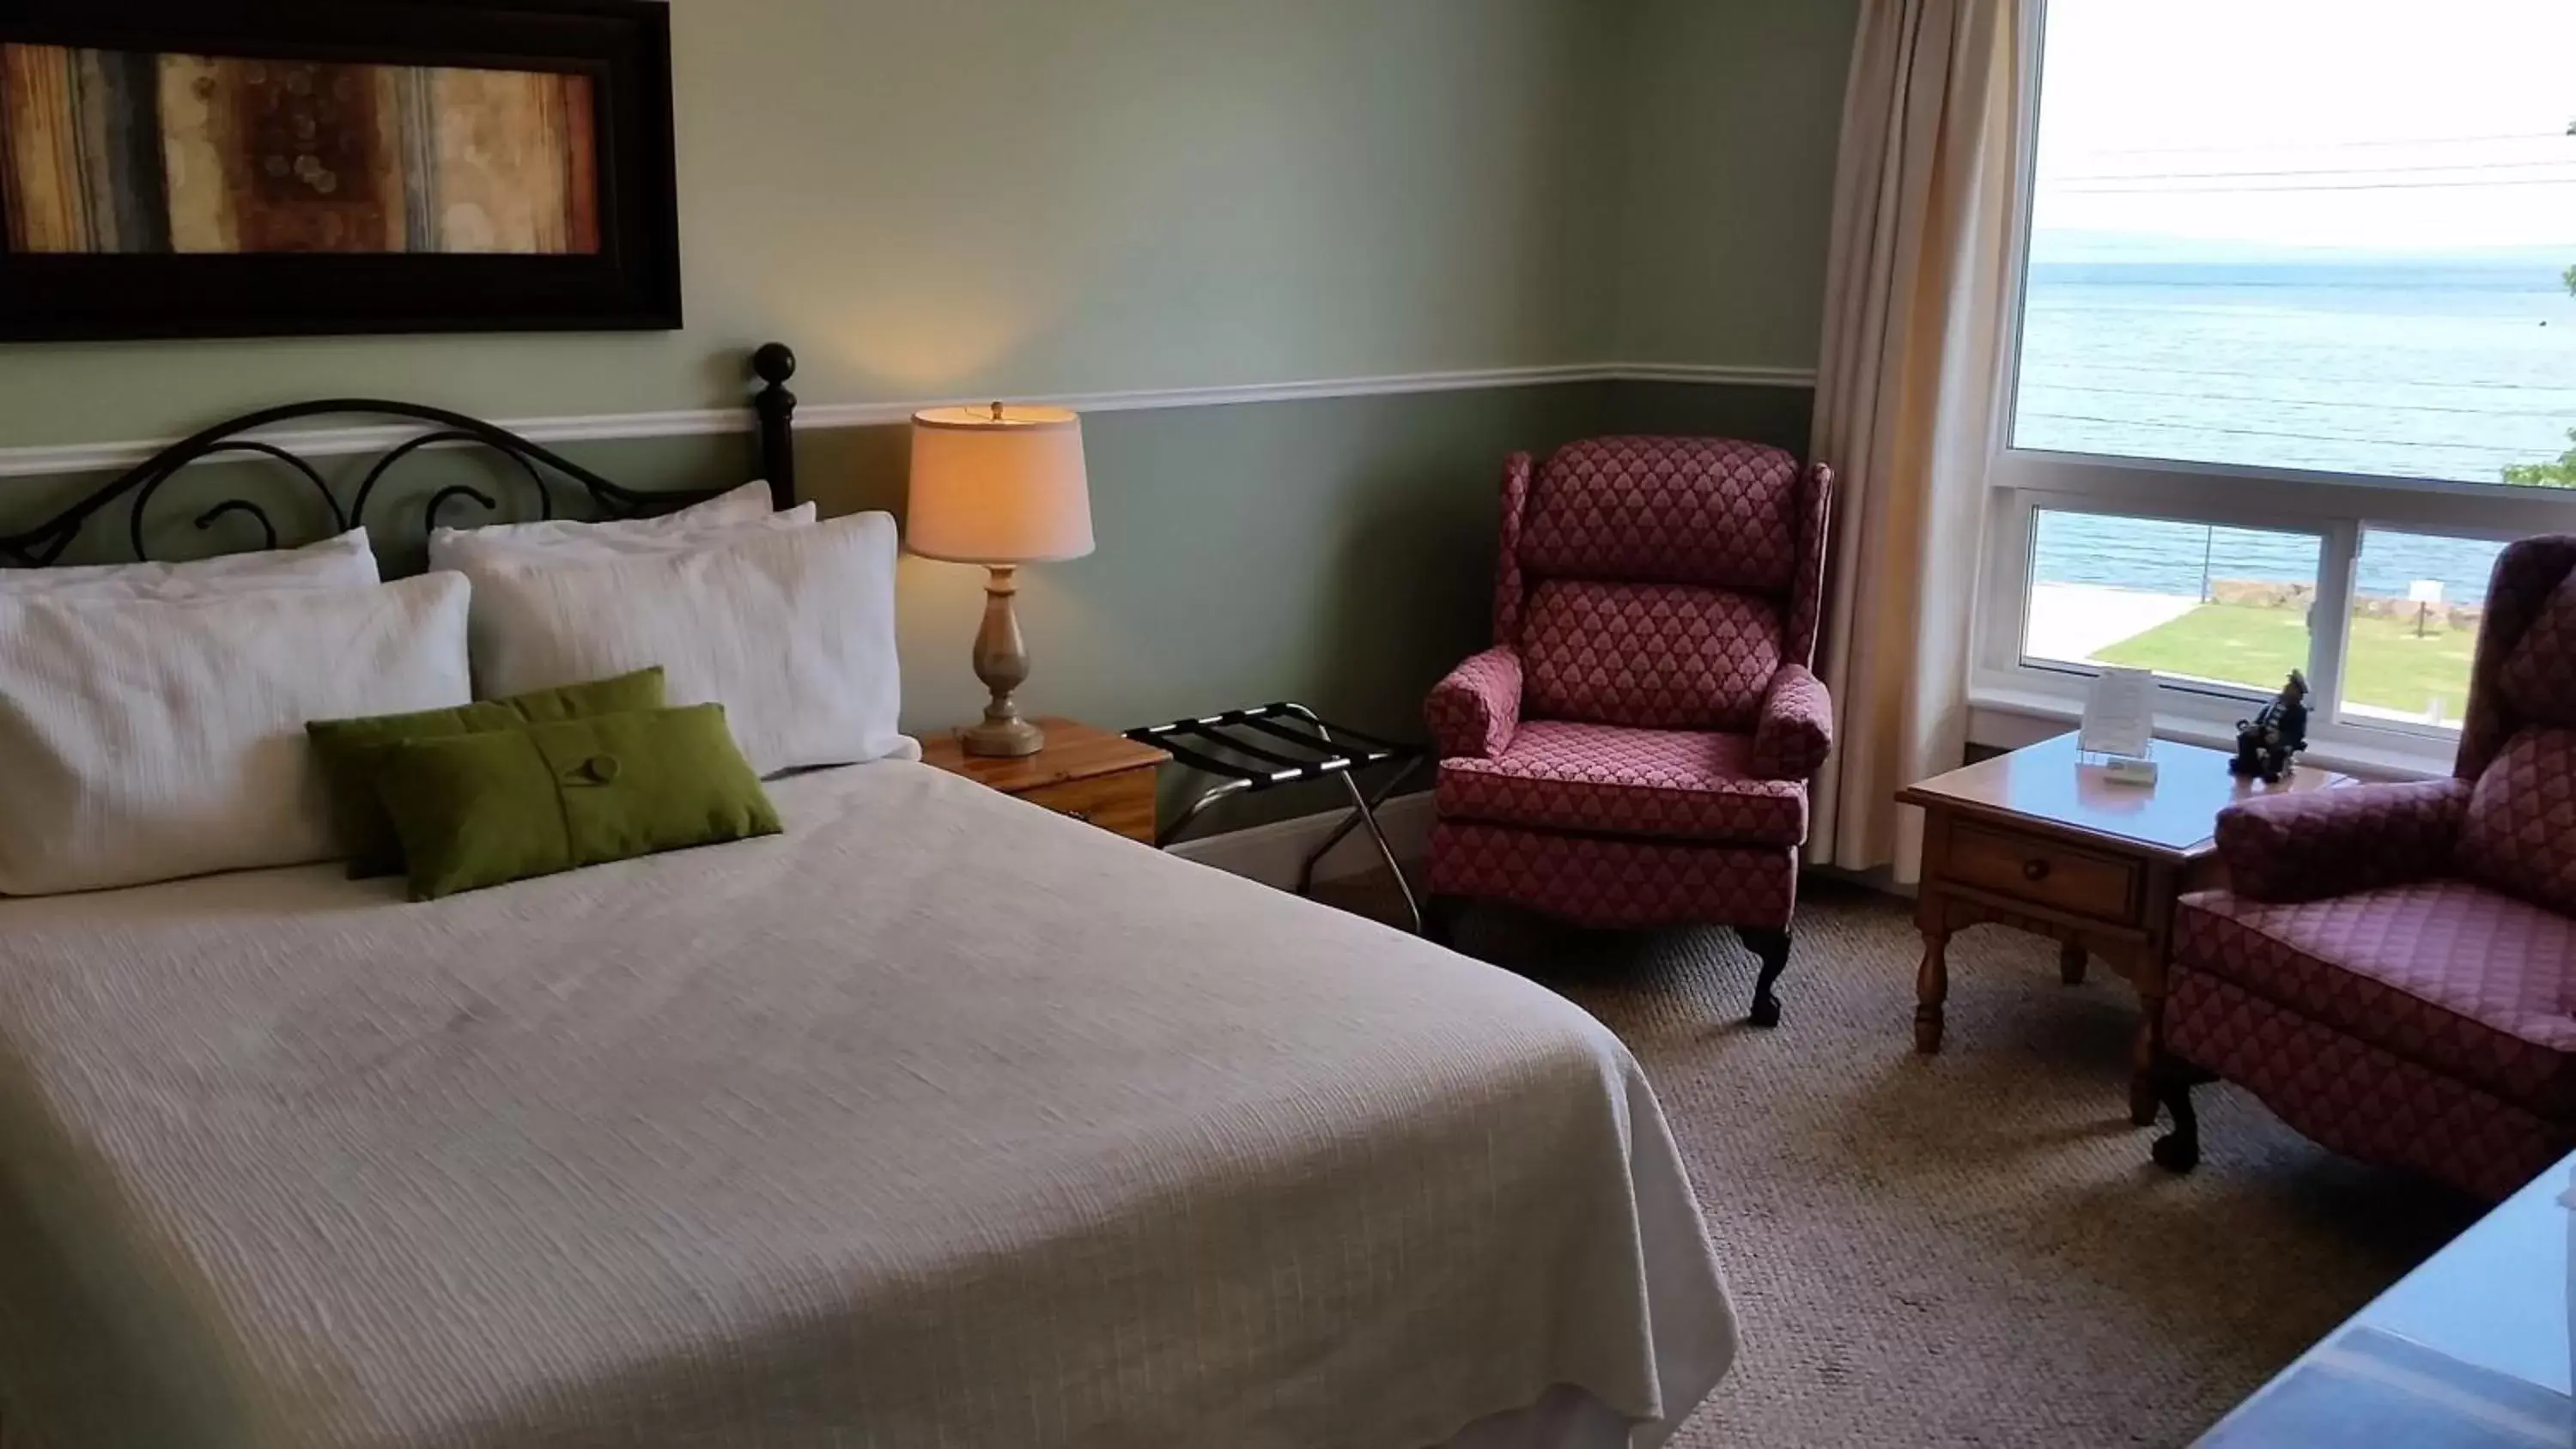 Bed, Room Photo in Bayside Inn